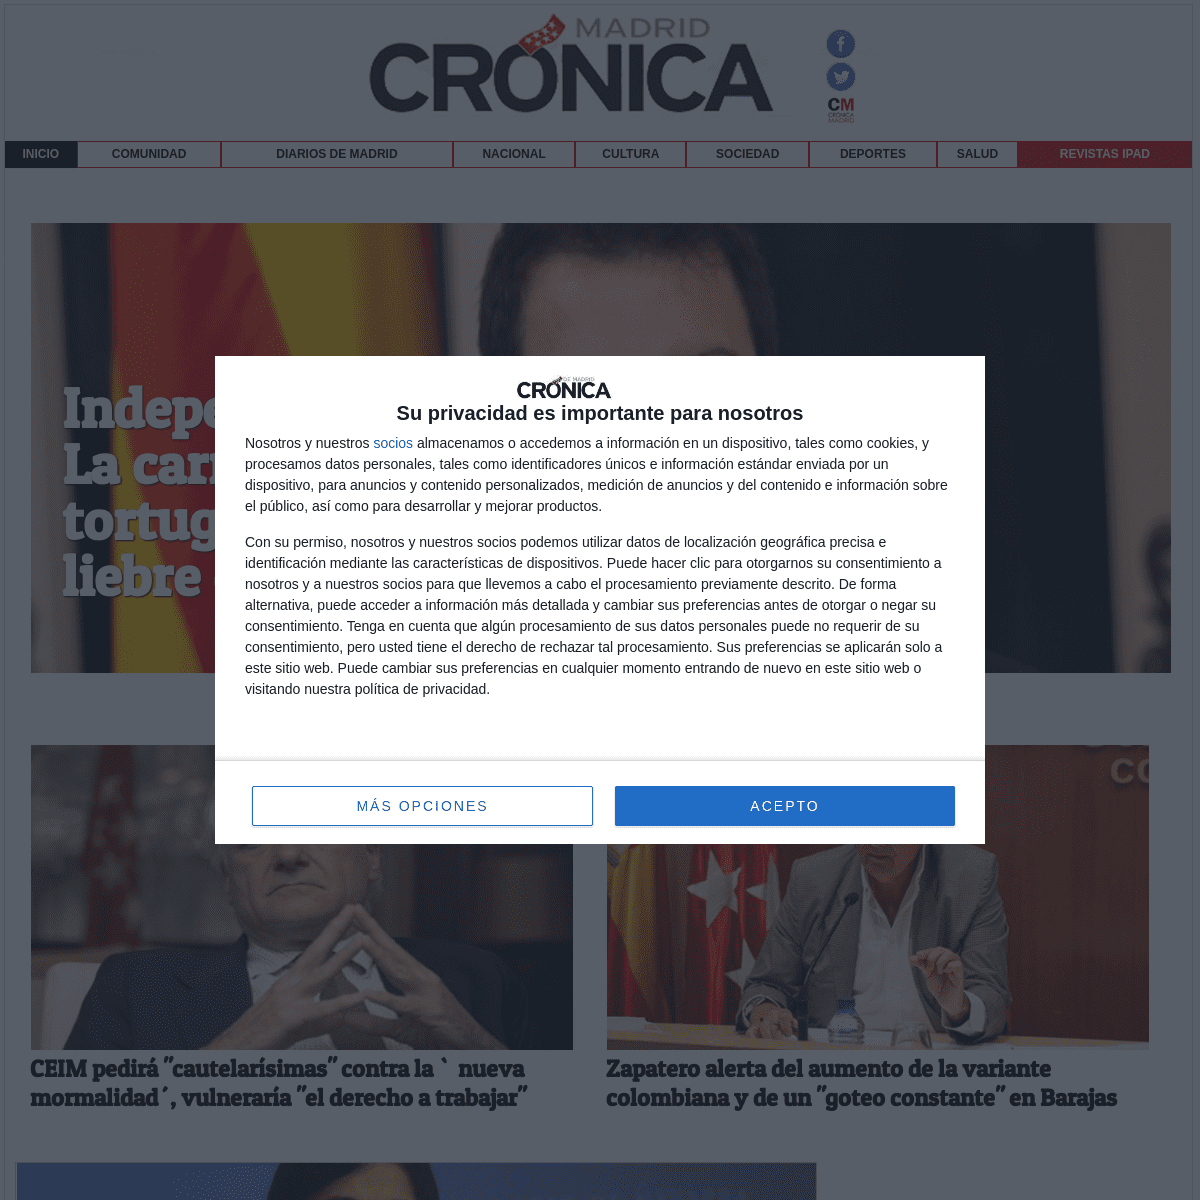 A complete backup of https://cronicamadrid.com